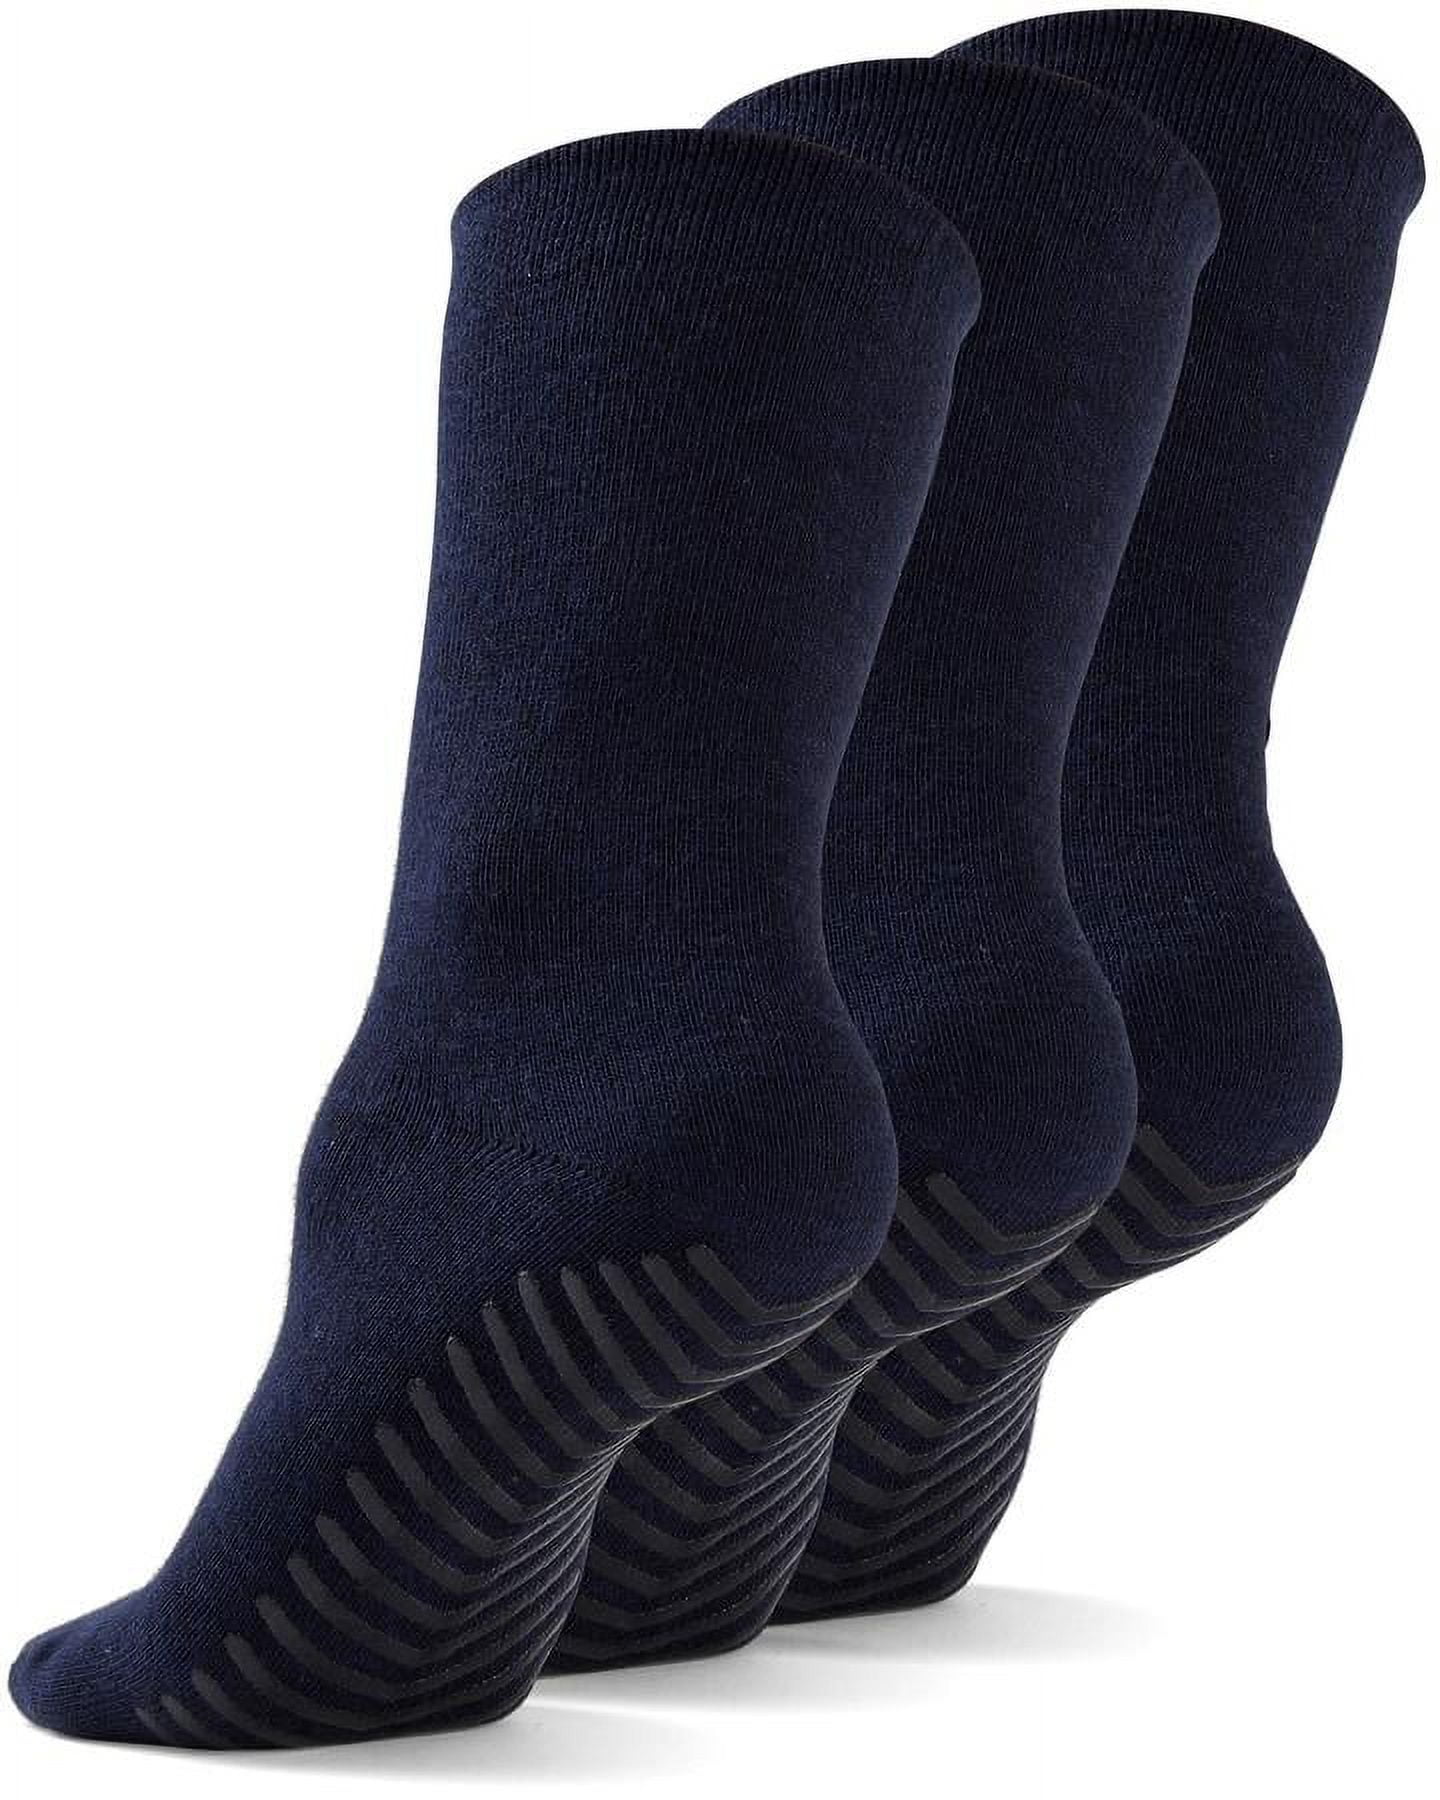 Deluxe Anti Slip Non Skid Barre Yoga Pilates Hospital Socks with Grips for Adults Men Women